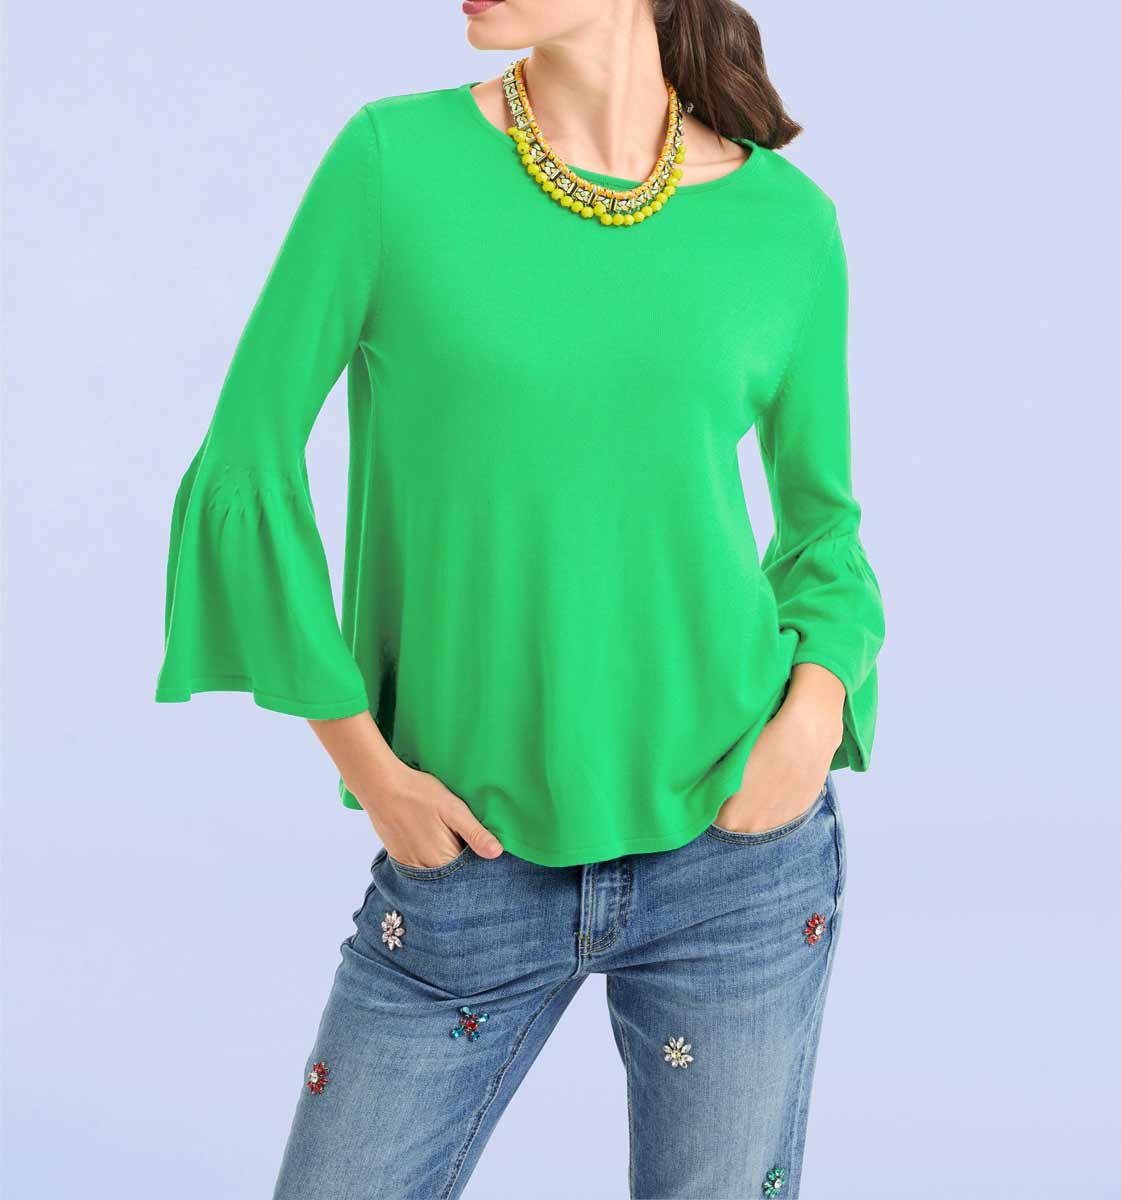 Rick Cardona Damen Designer-Pullover mit Volants, grün